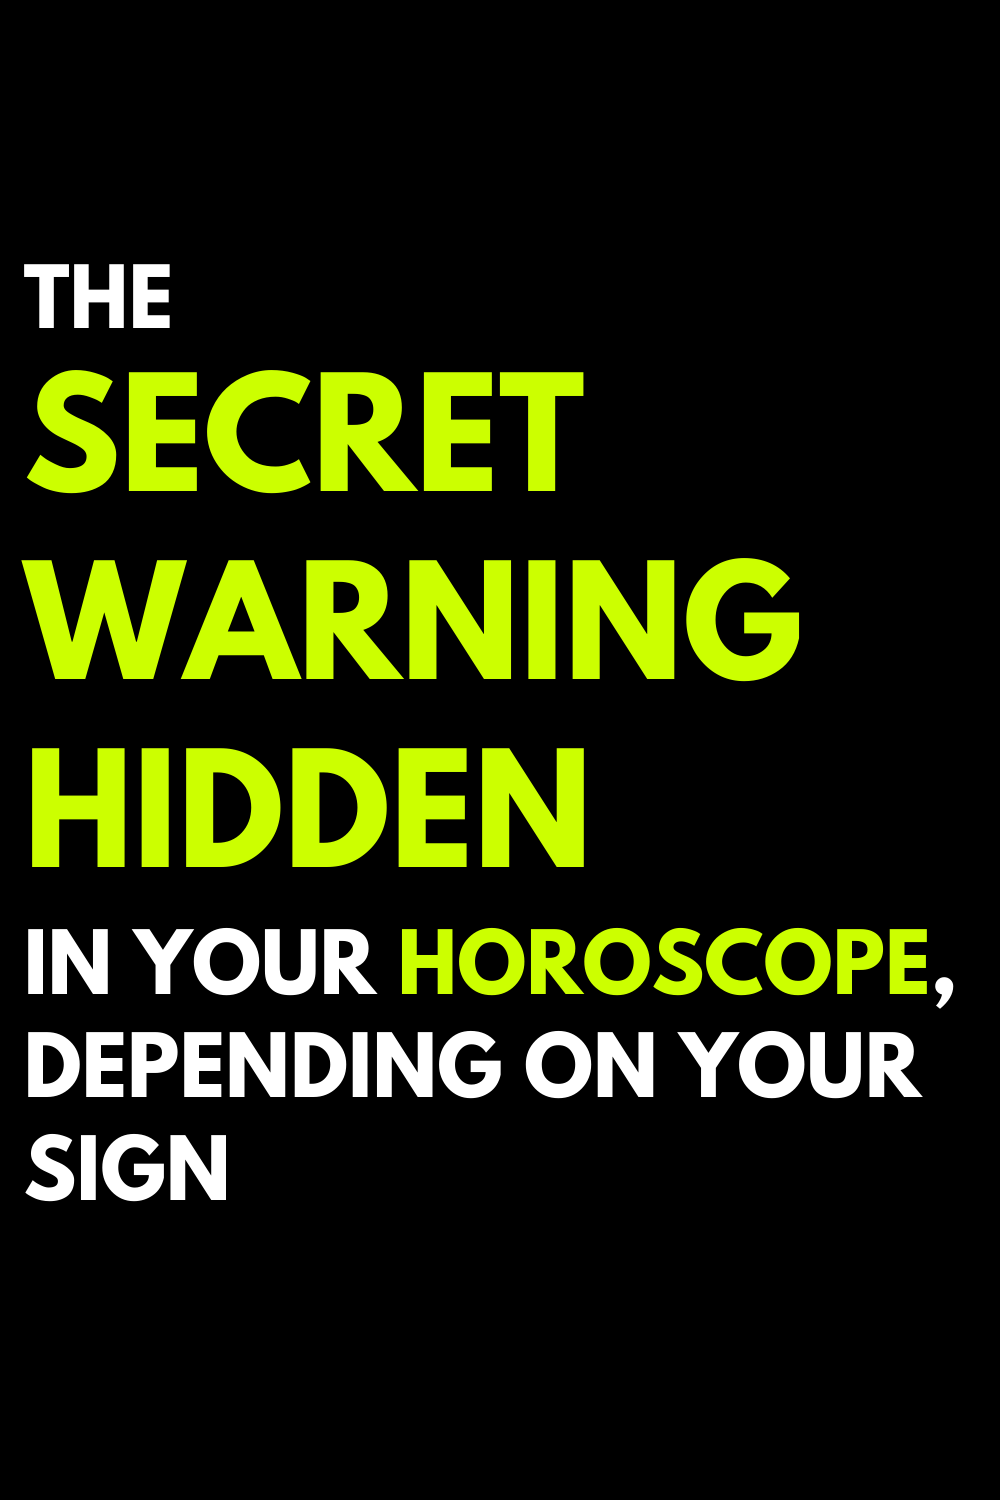 The secret warning hidden in your horoscope, depending on your sign